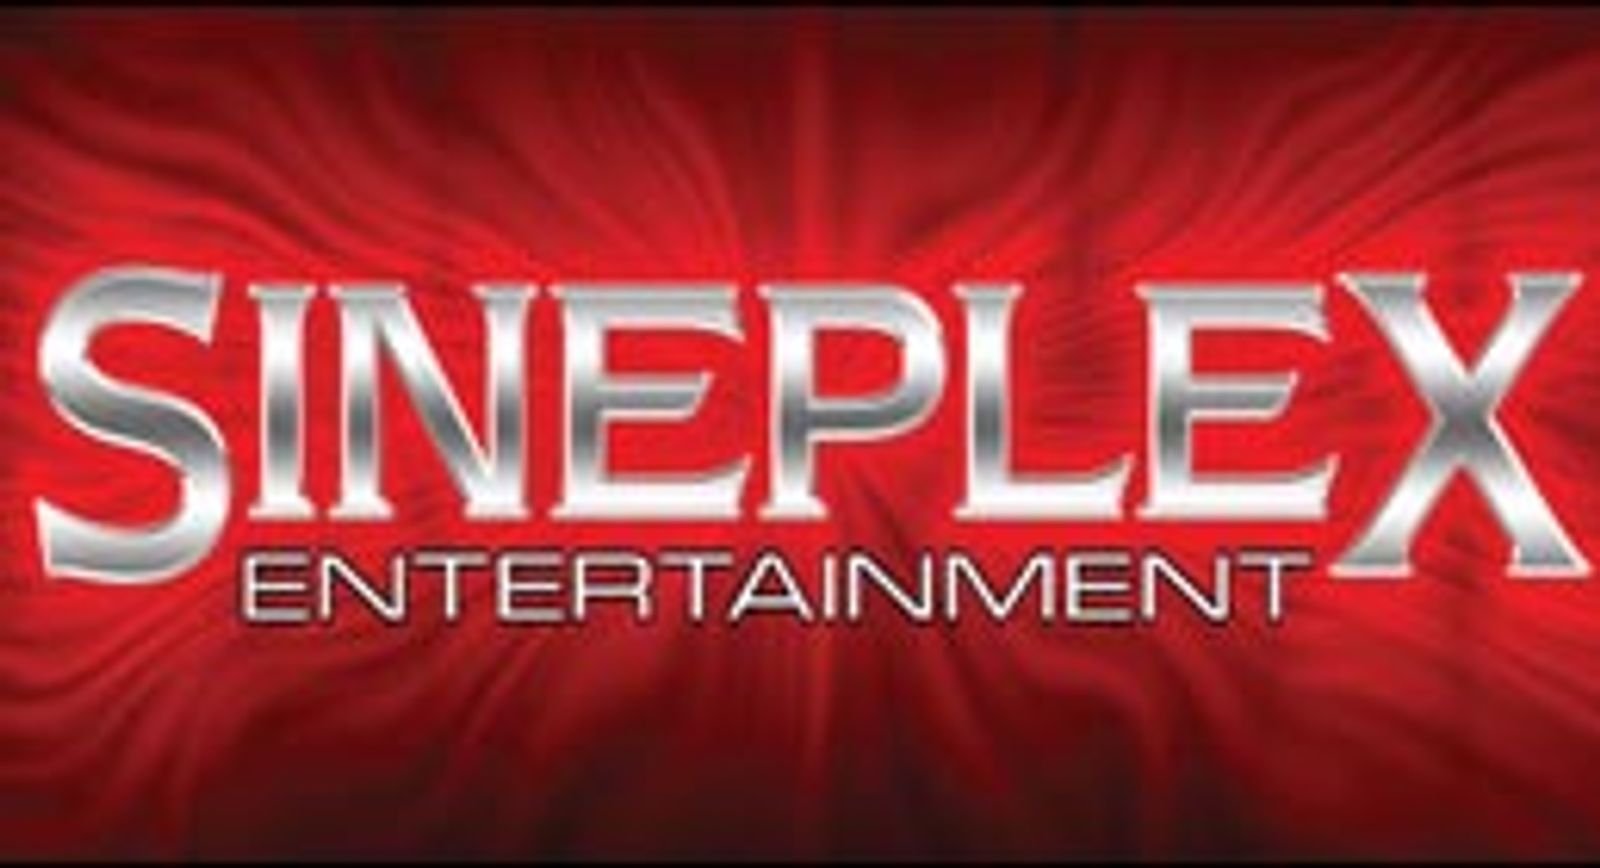 Sineplex Entertainment Sponsors Hotwire for Ozzfest